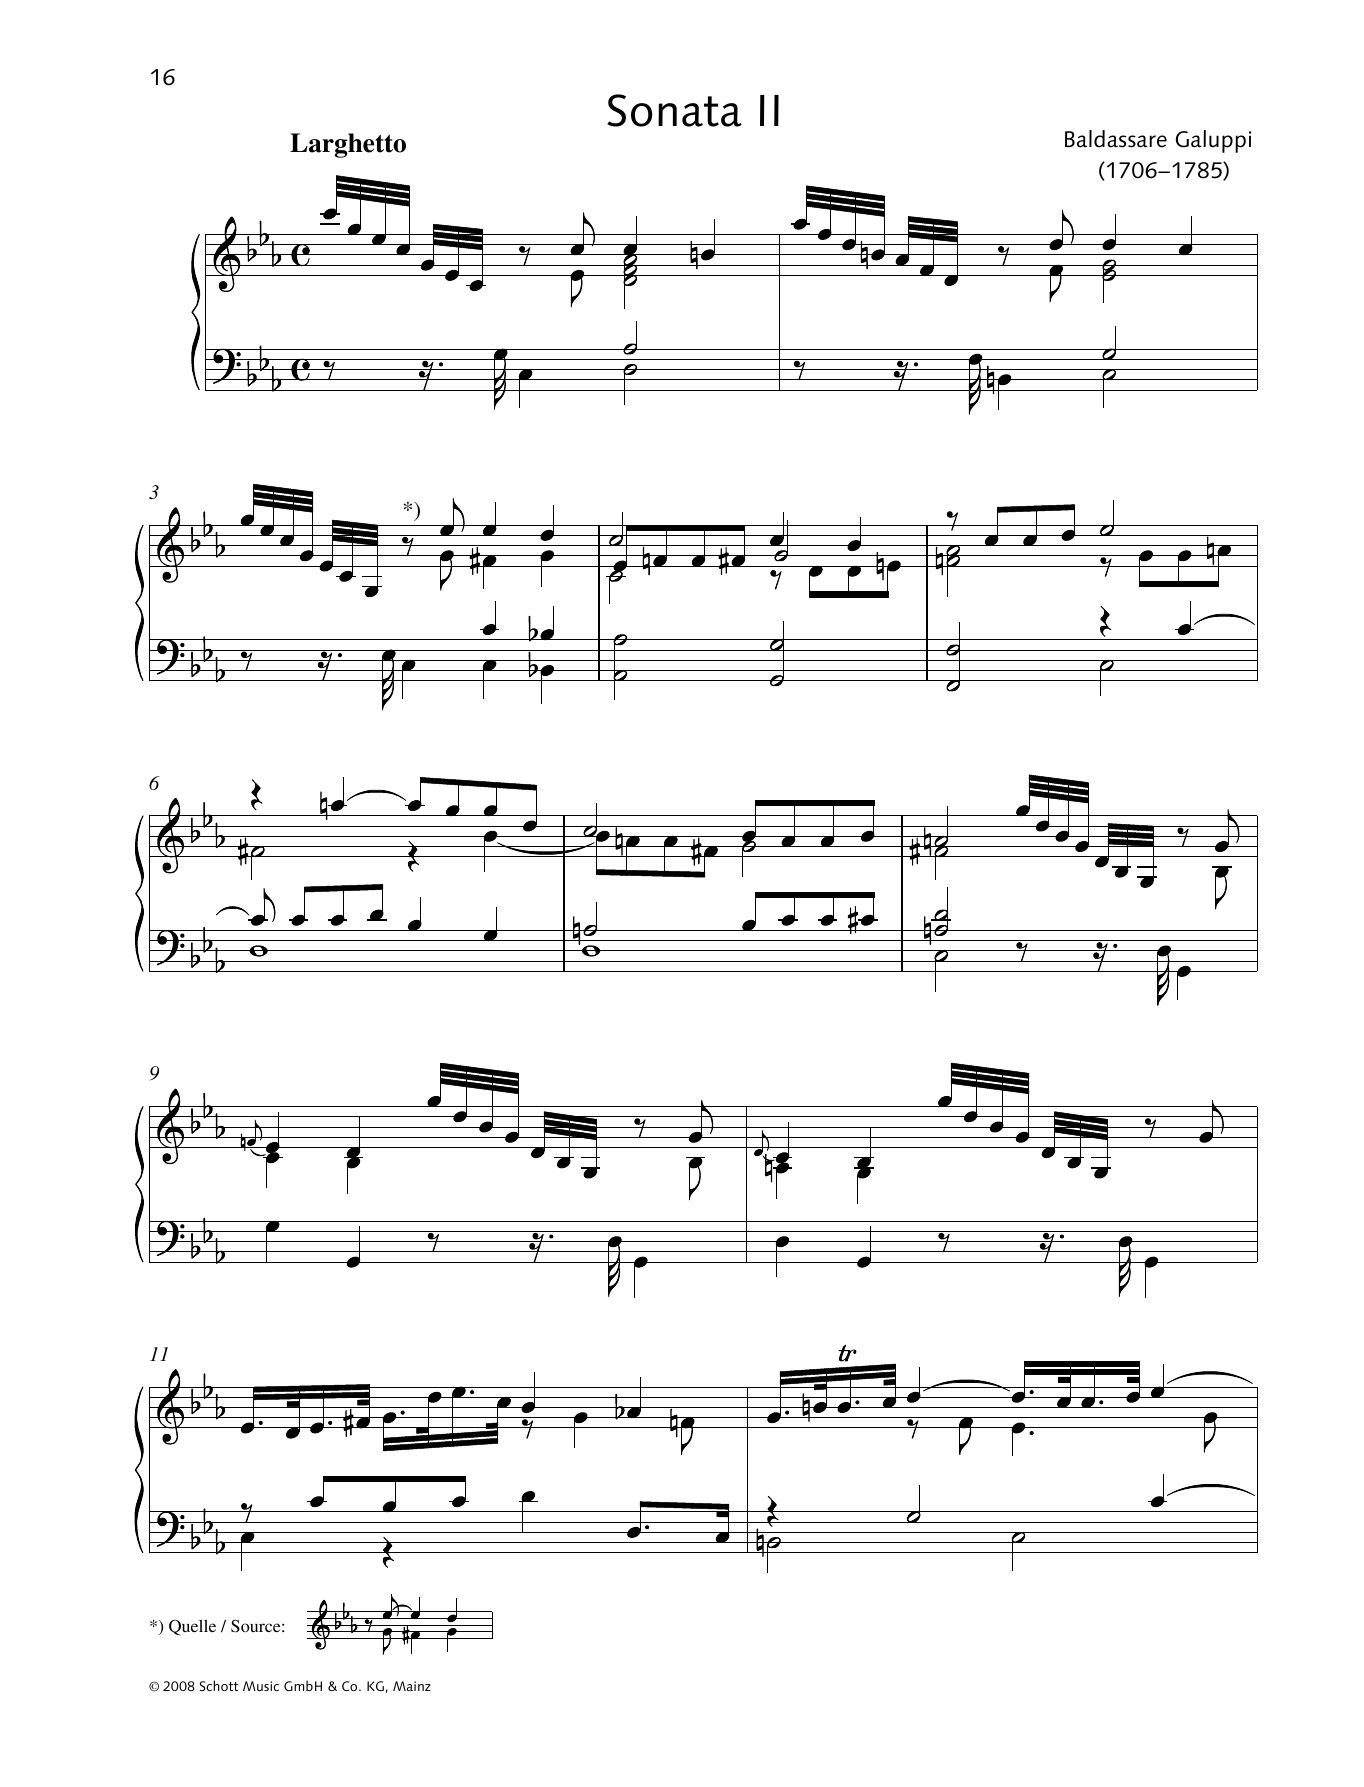 Download Baldassare Galuppi Sonata II C minor Sheet Music and learn how to play Piano Solo PDF digital score in minutes